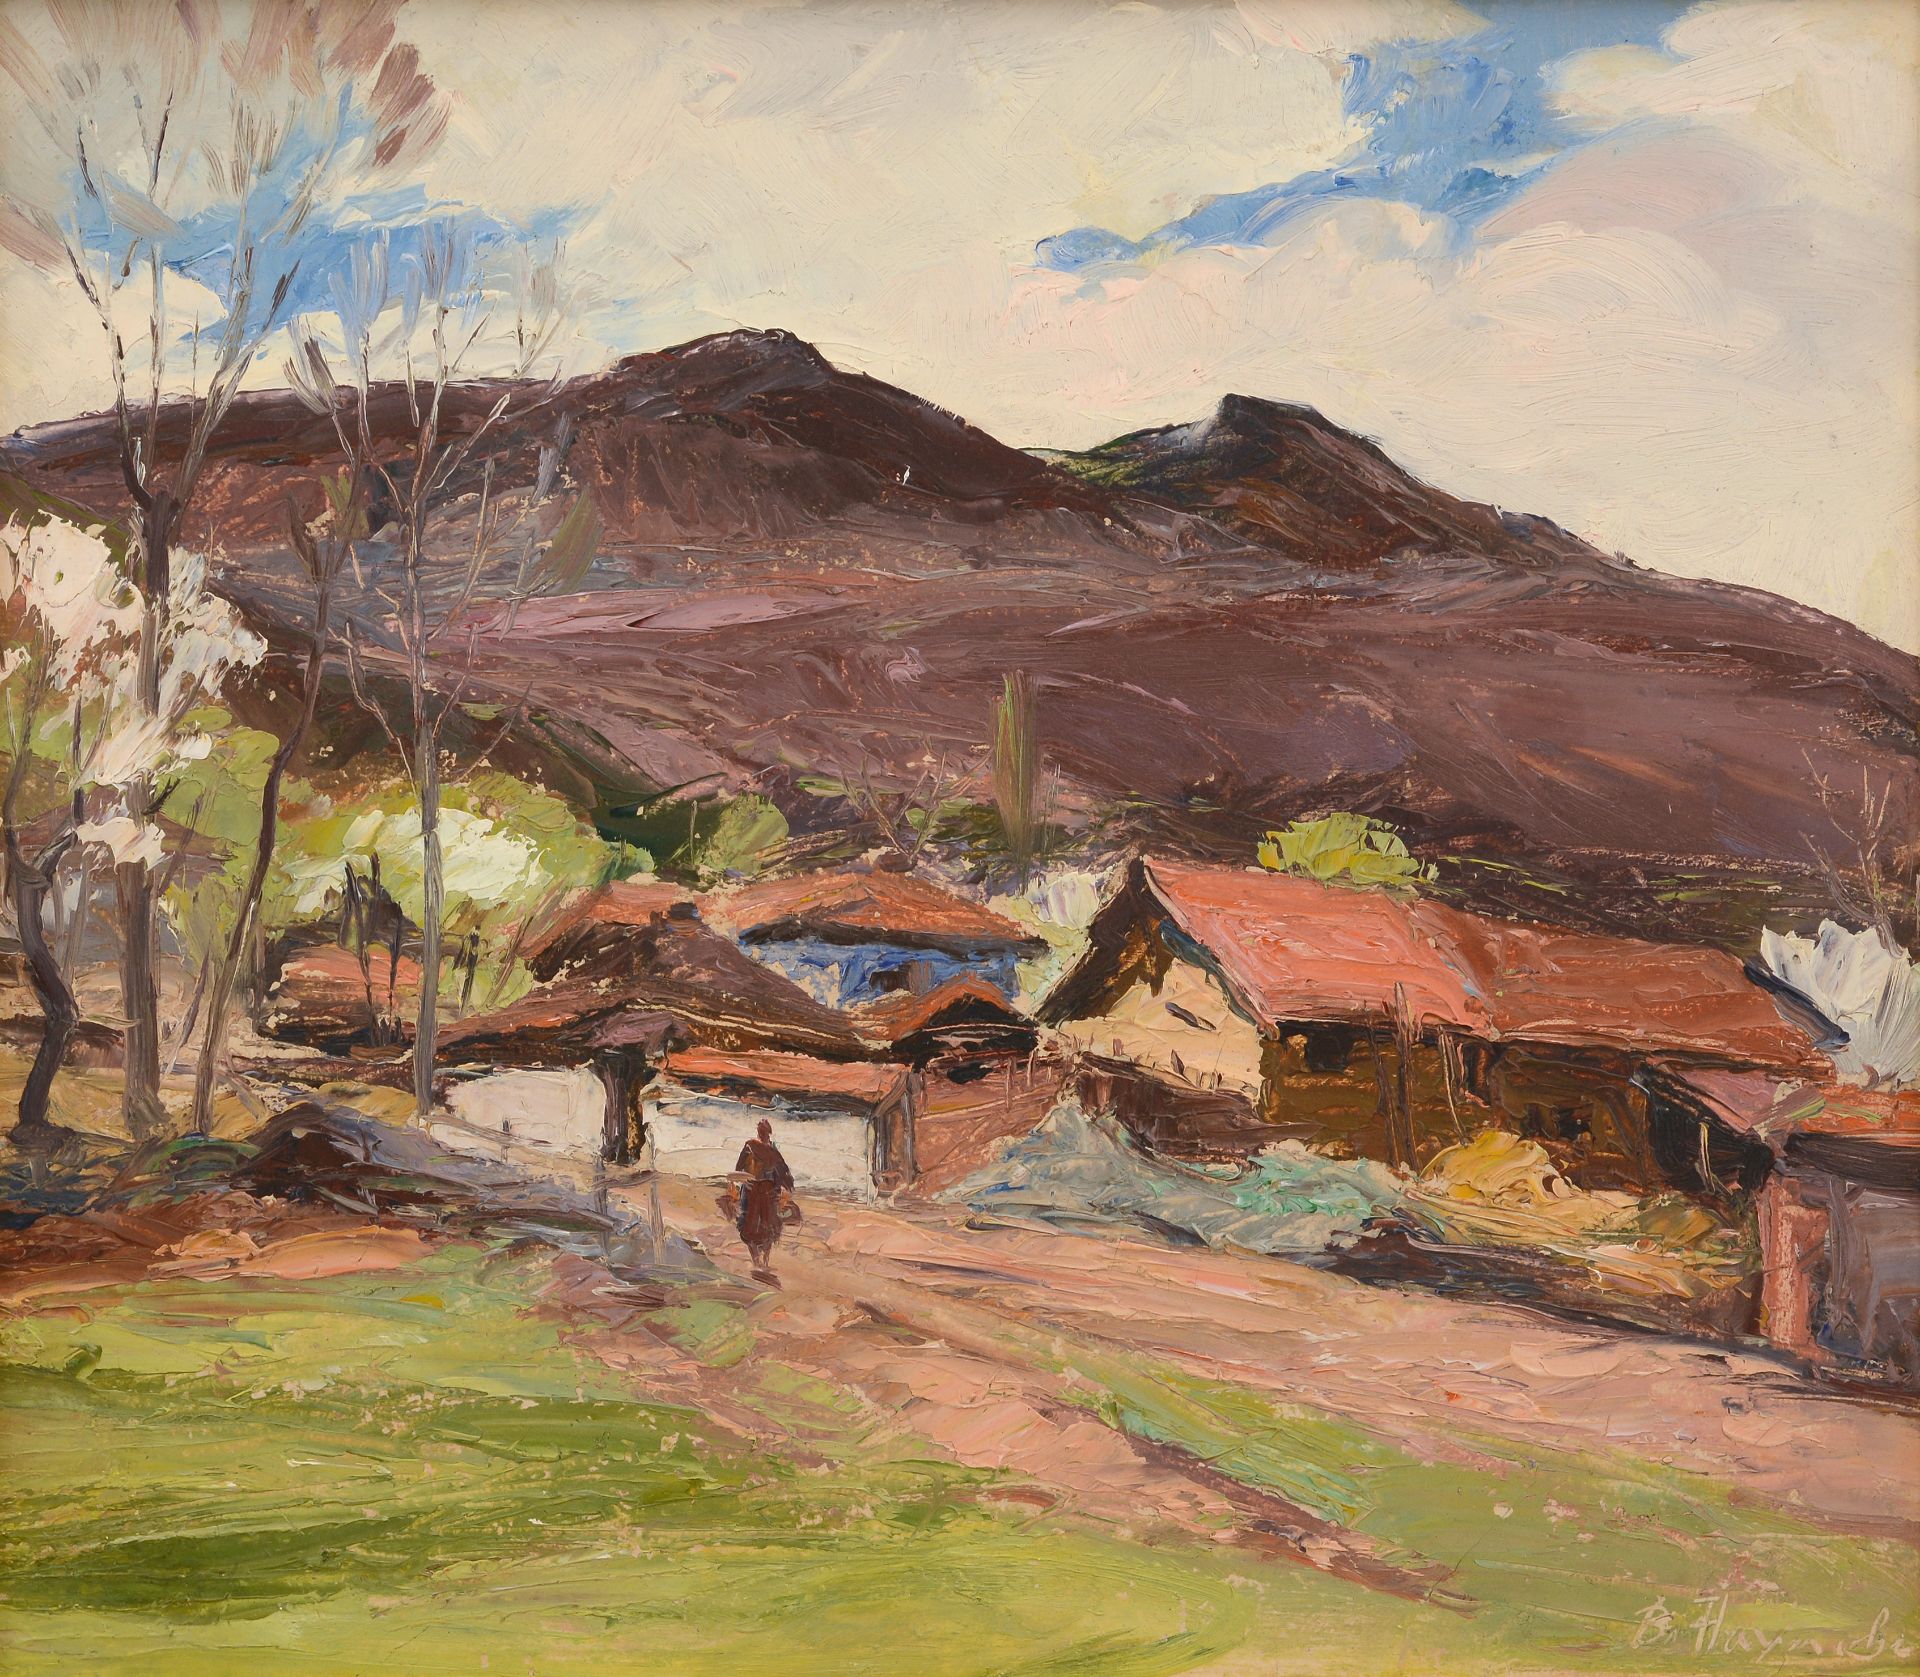 VLADIMIR NAUMOV NAUMOV /1897-1949/ "Landscape from the village of Bankya"